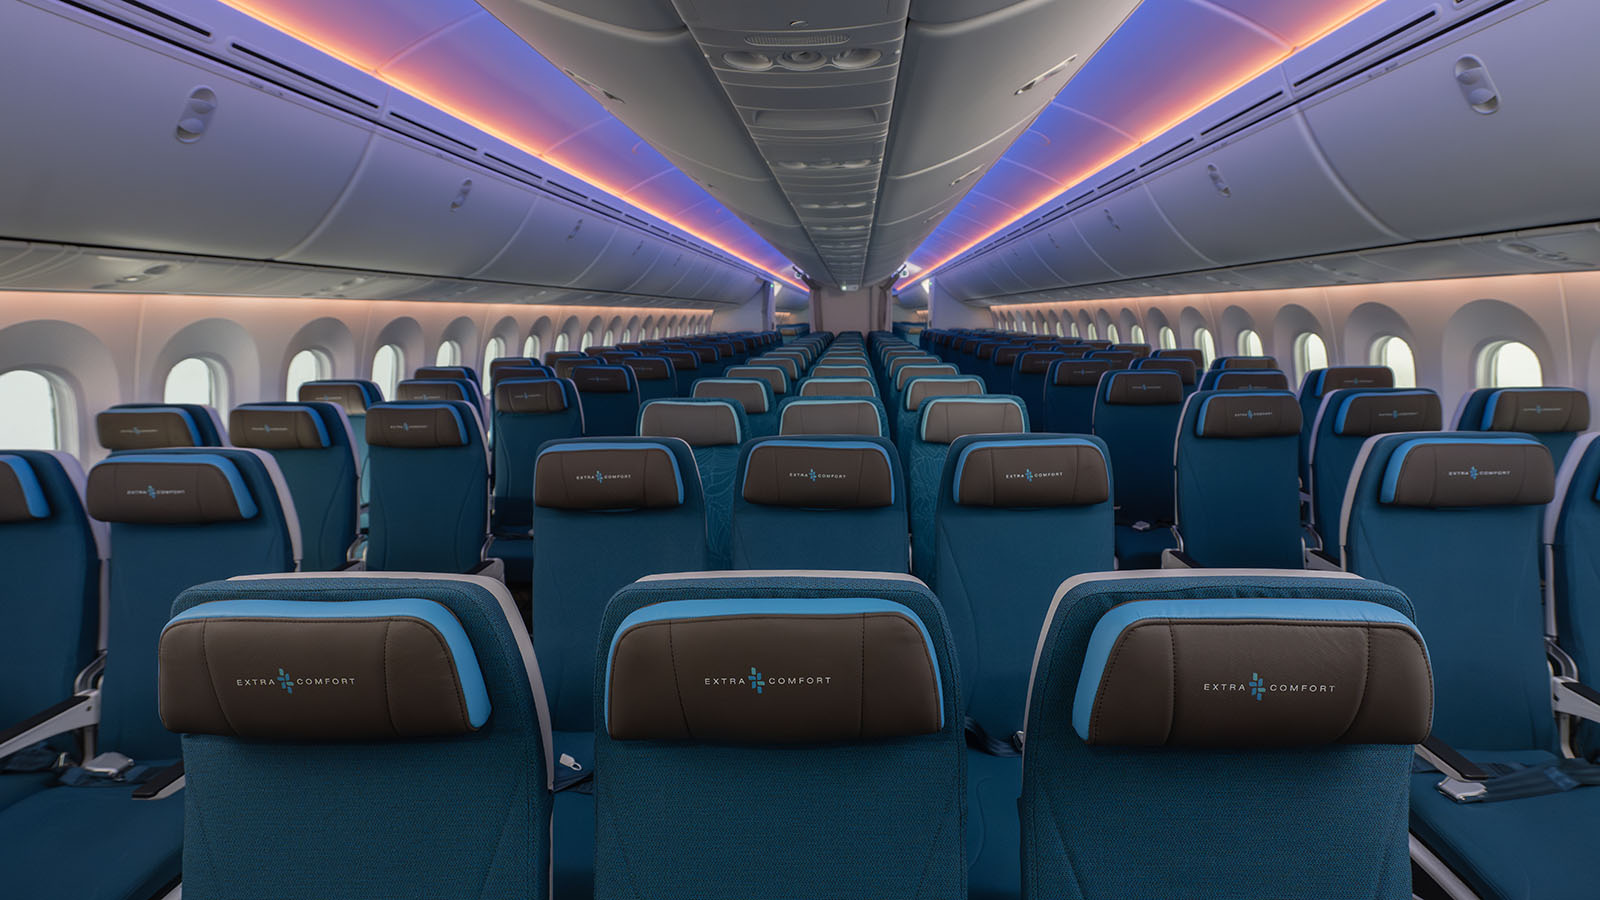 Extra legroom Economy seating on Hawaiian Airlines' Dreamliner